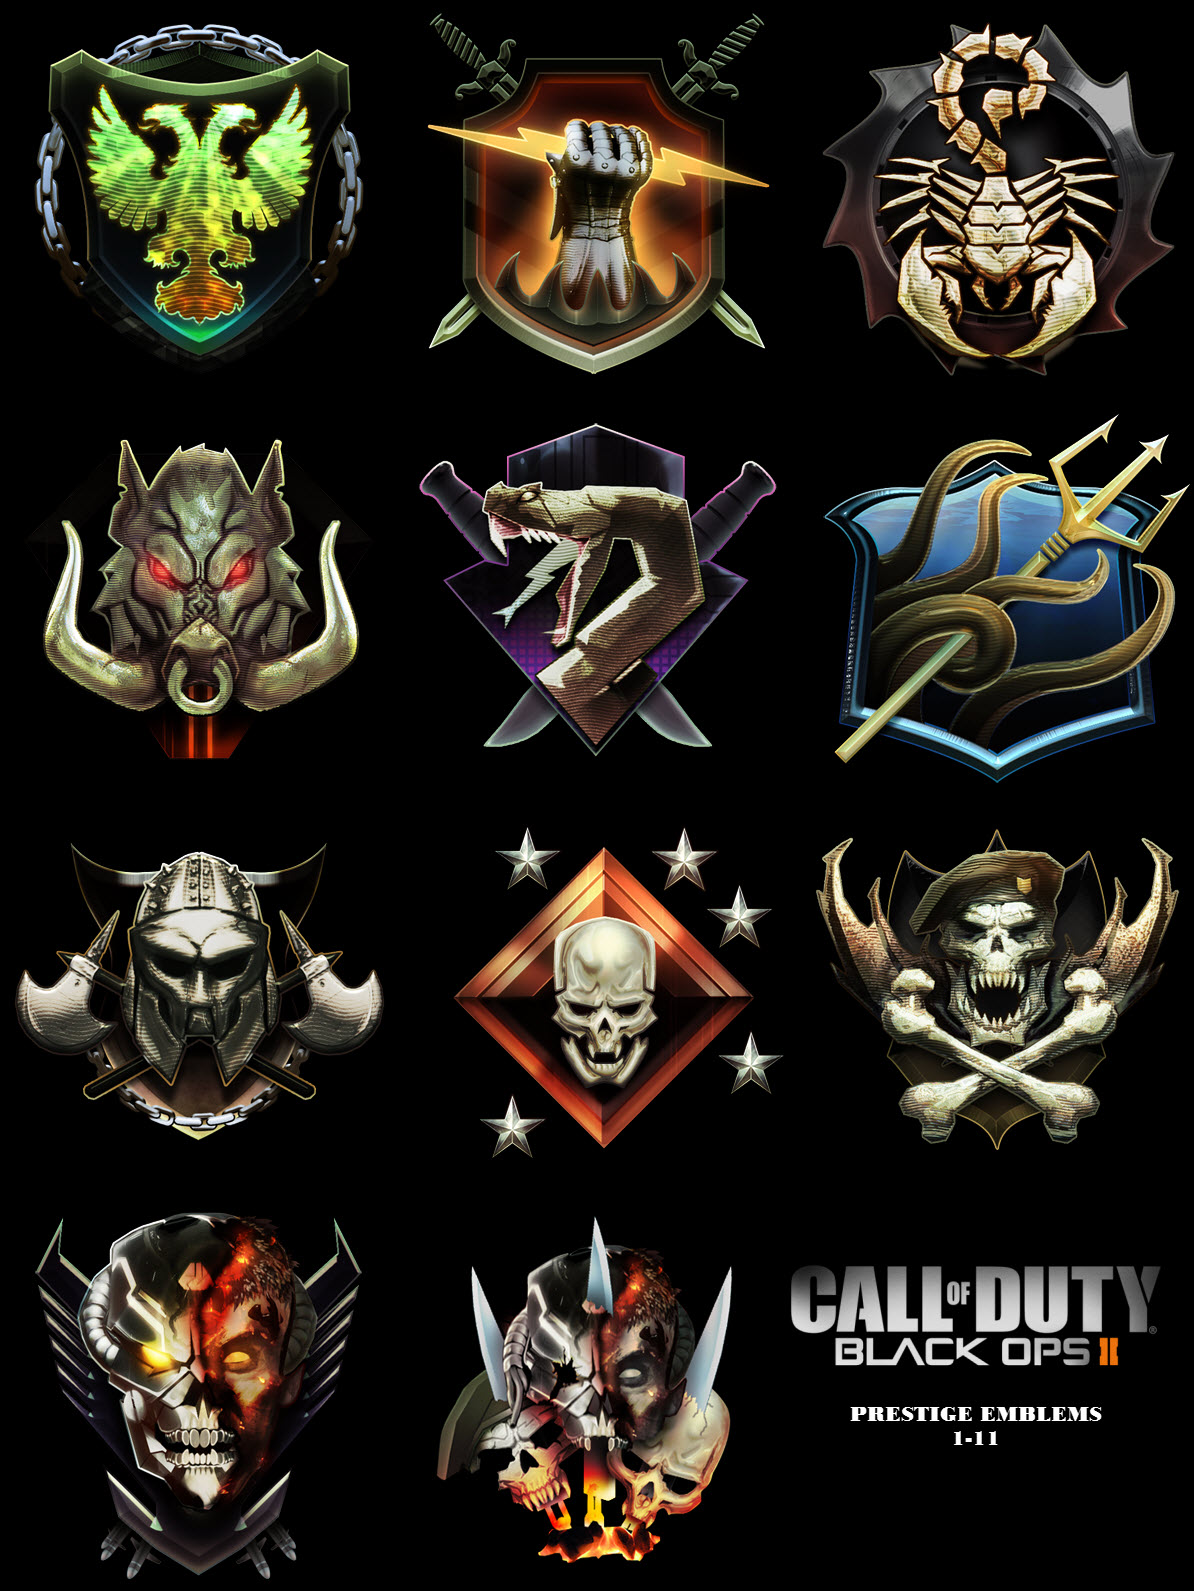 Black Ops Prestige Emblemscall Of Duty Emblems